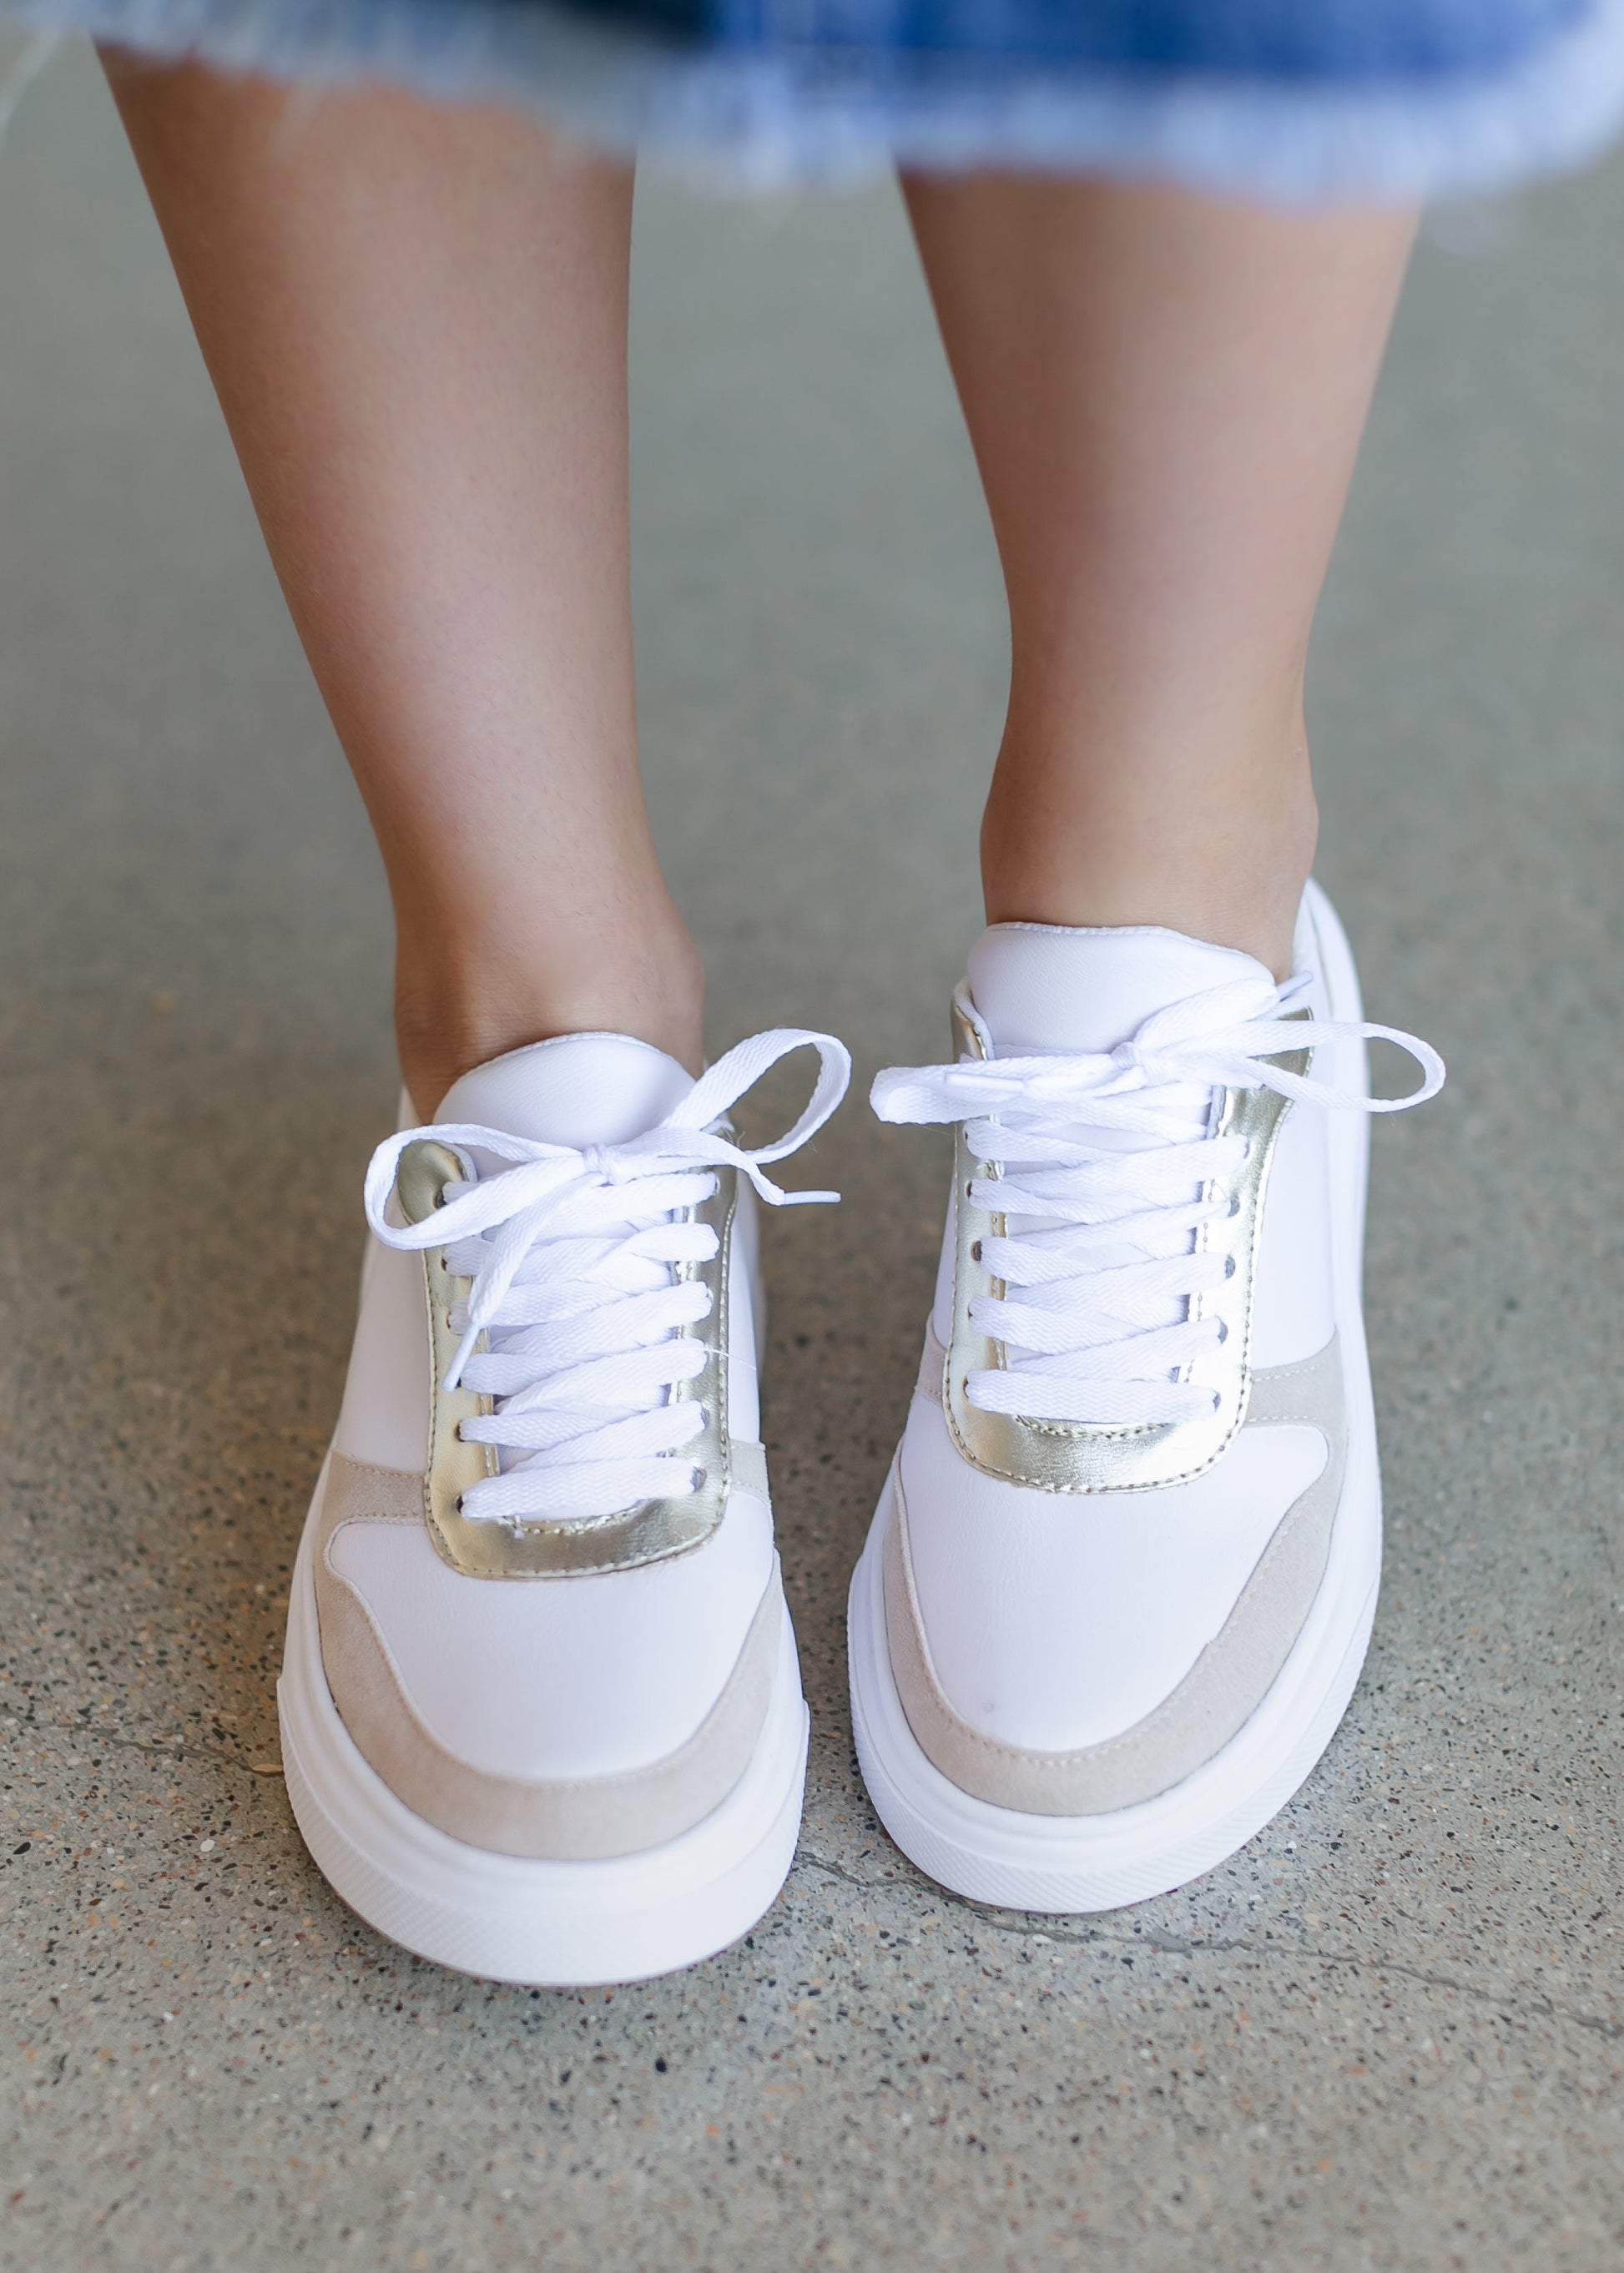 Lace-up Platform Sneakers Shoes